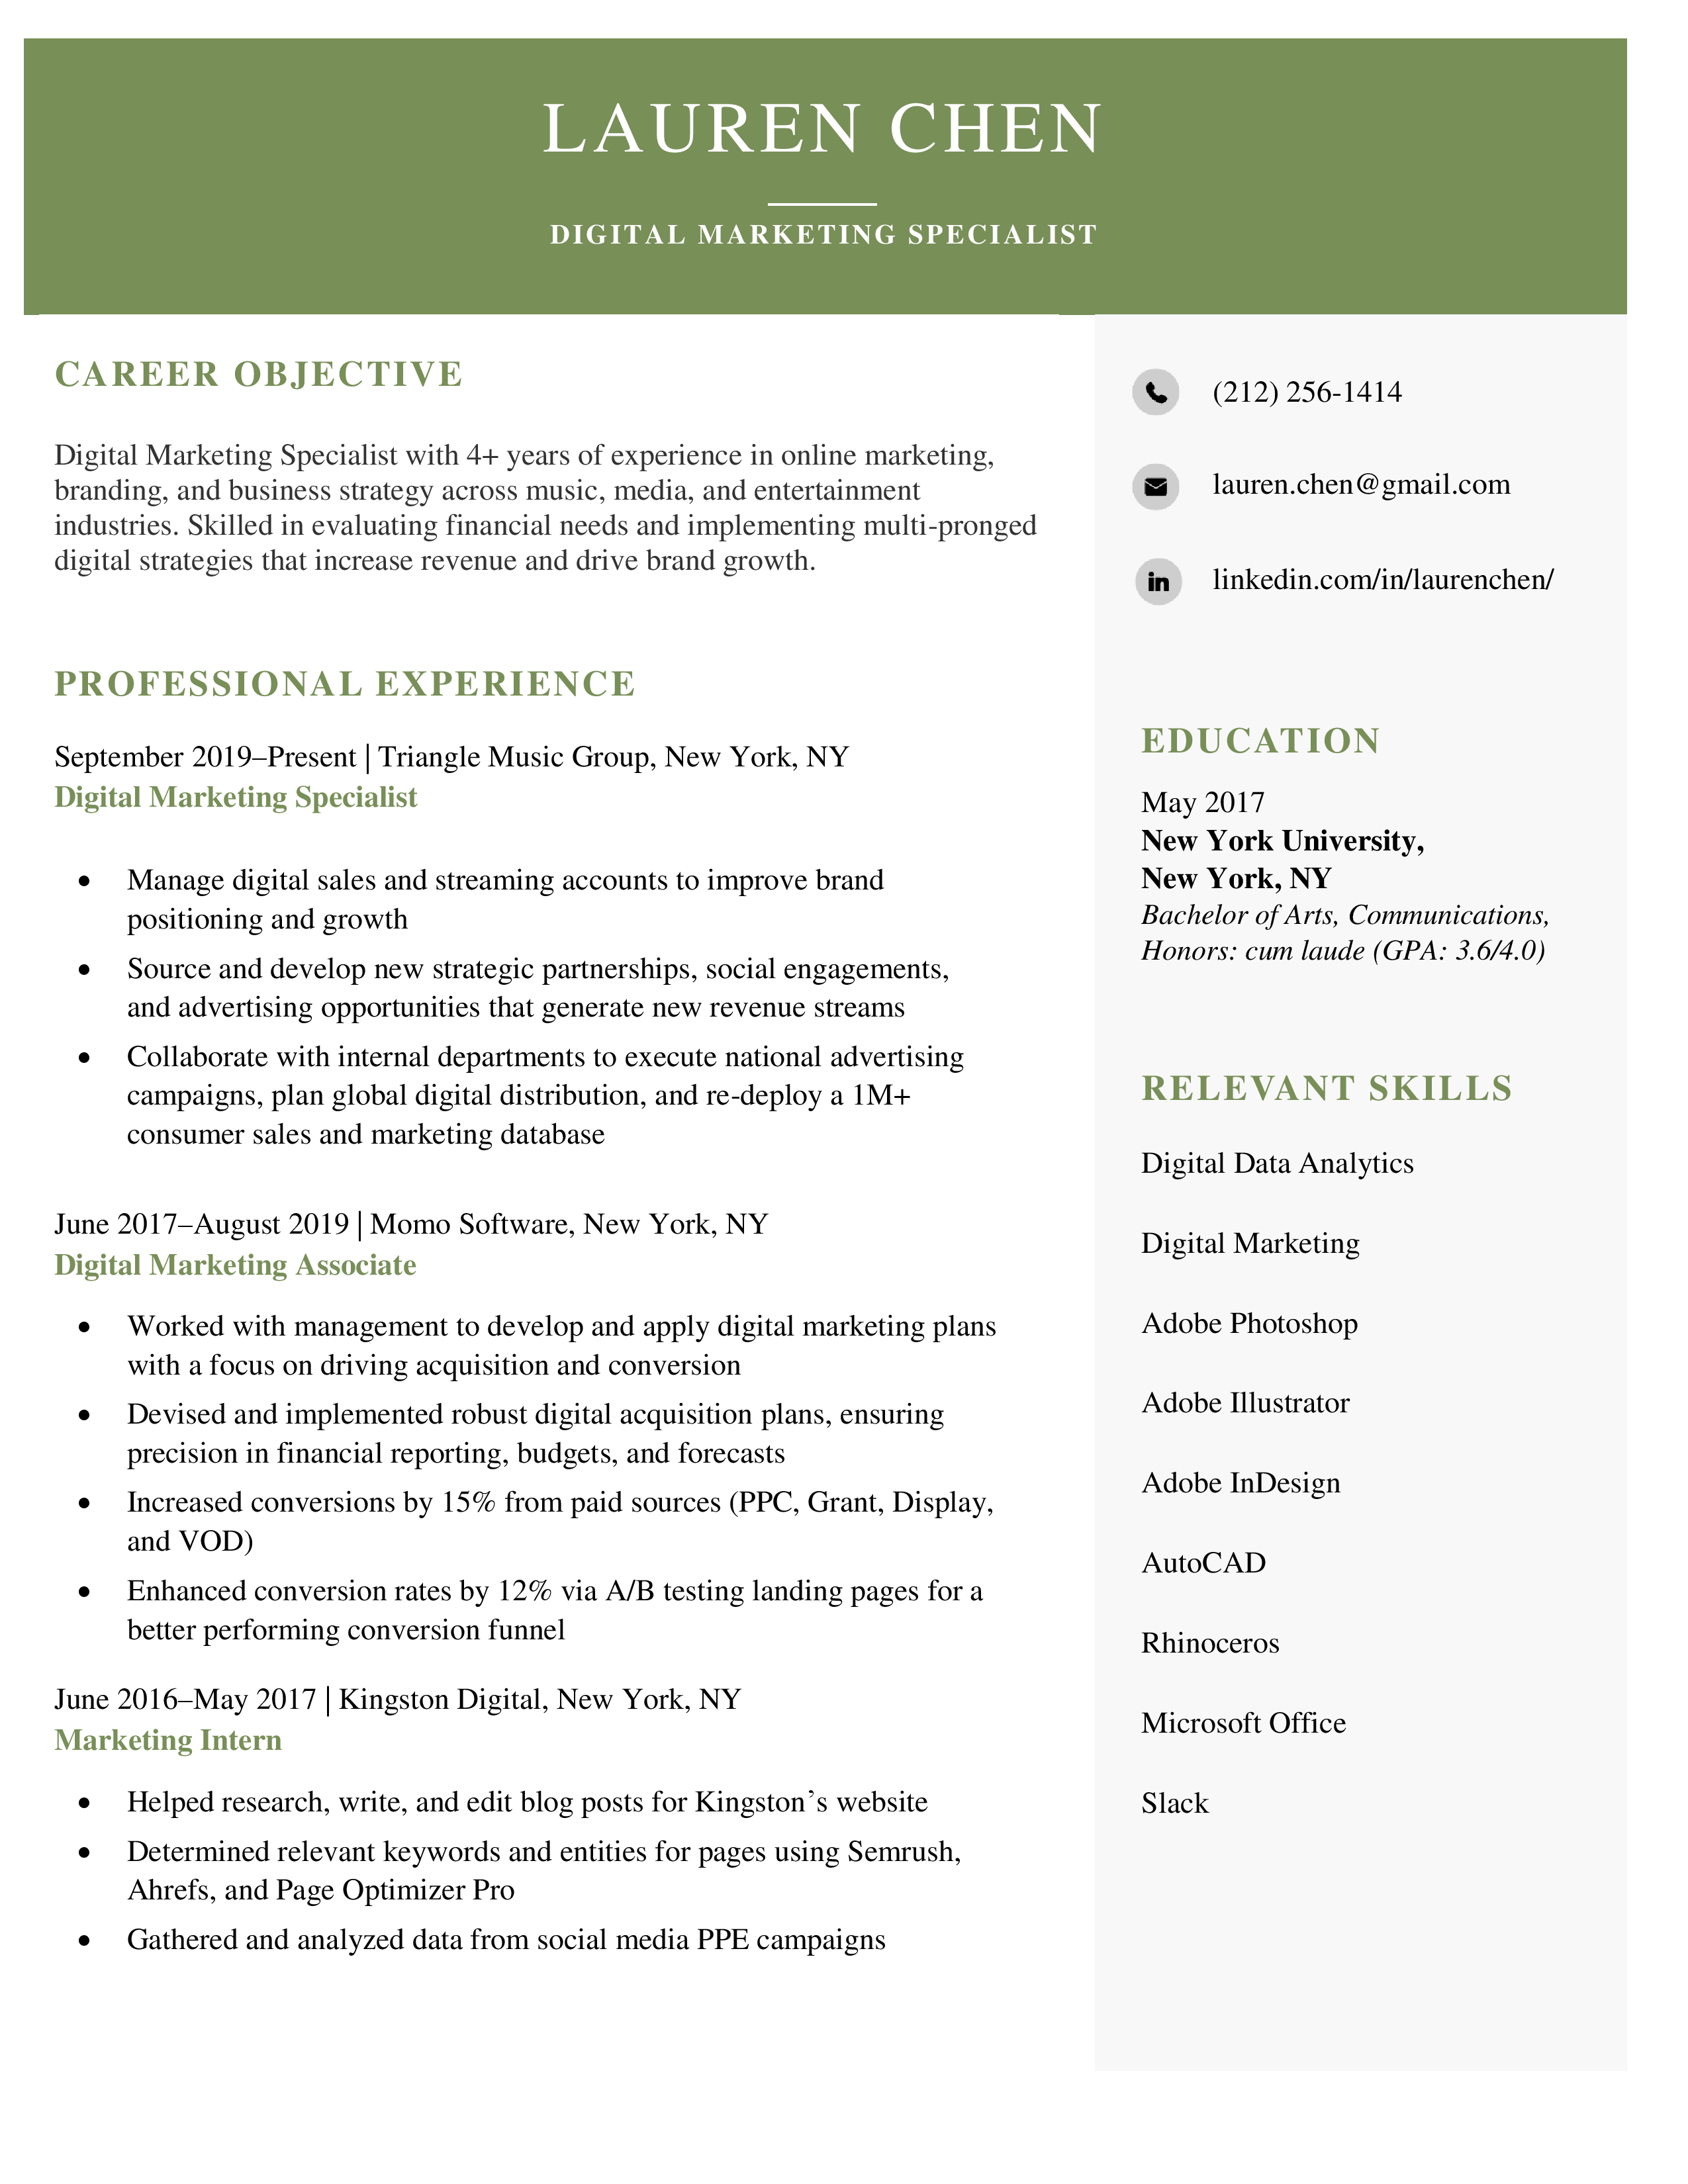 Corporate-Modern-Resume-Template-Green